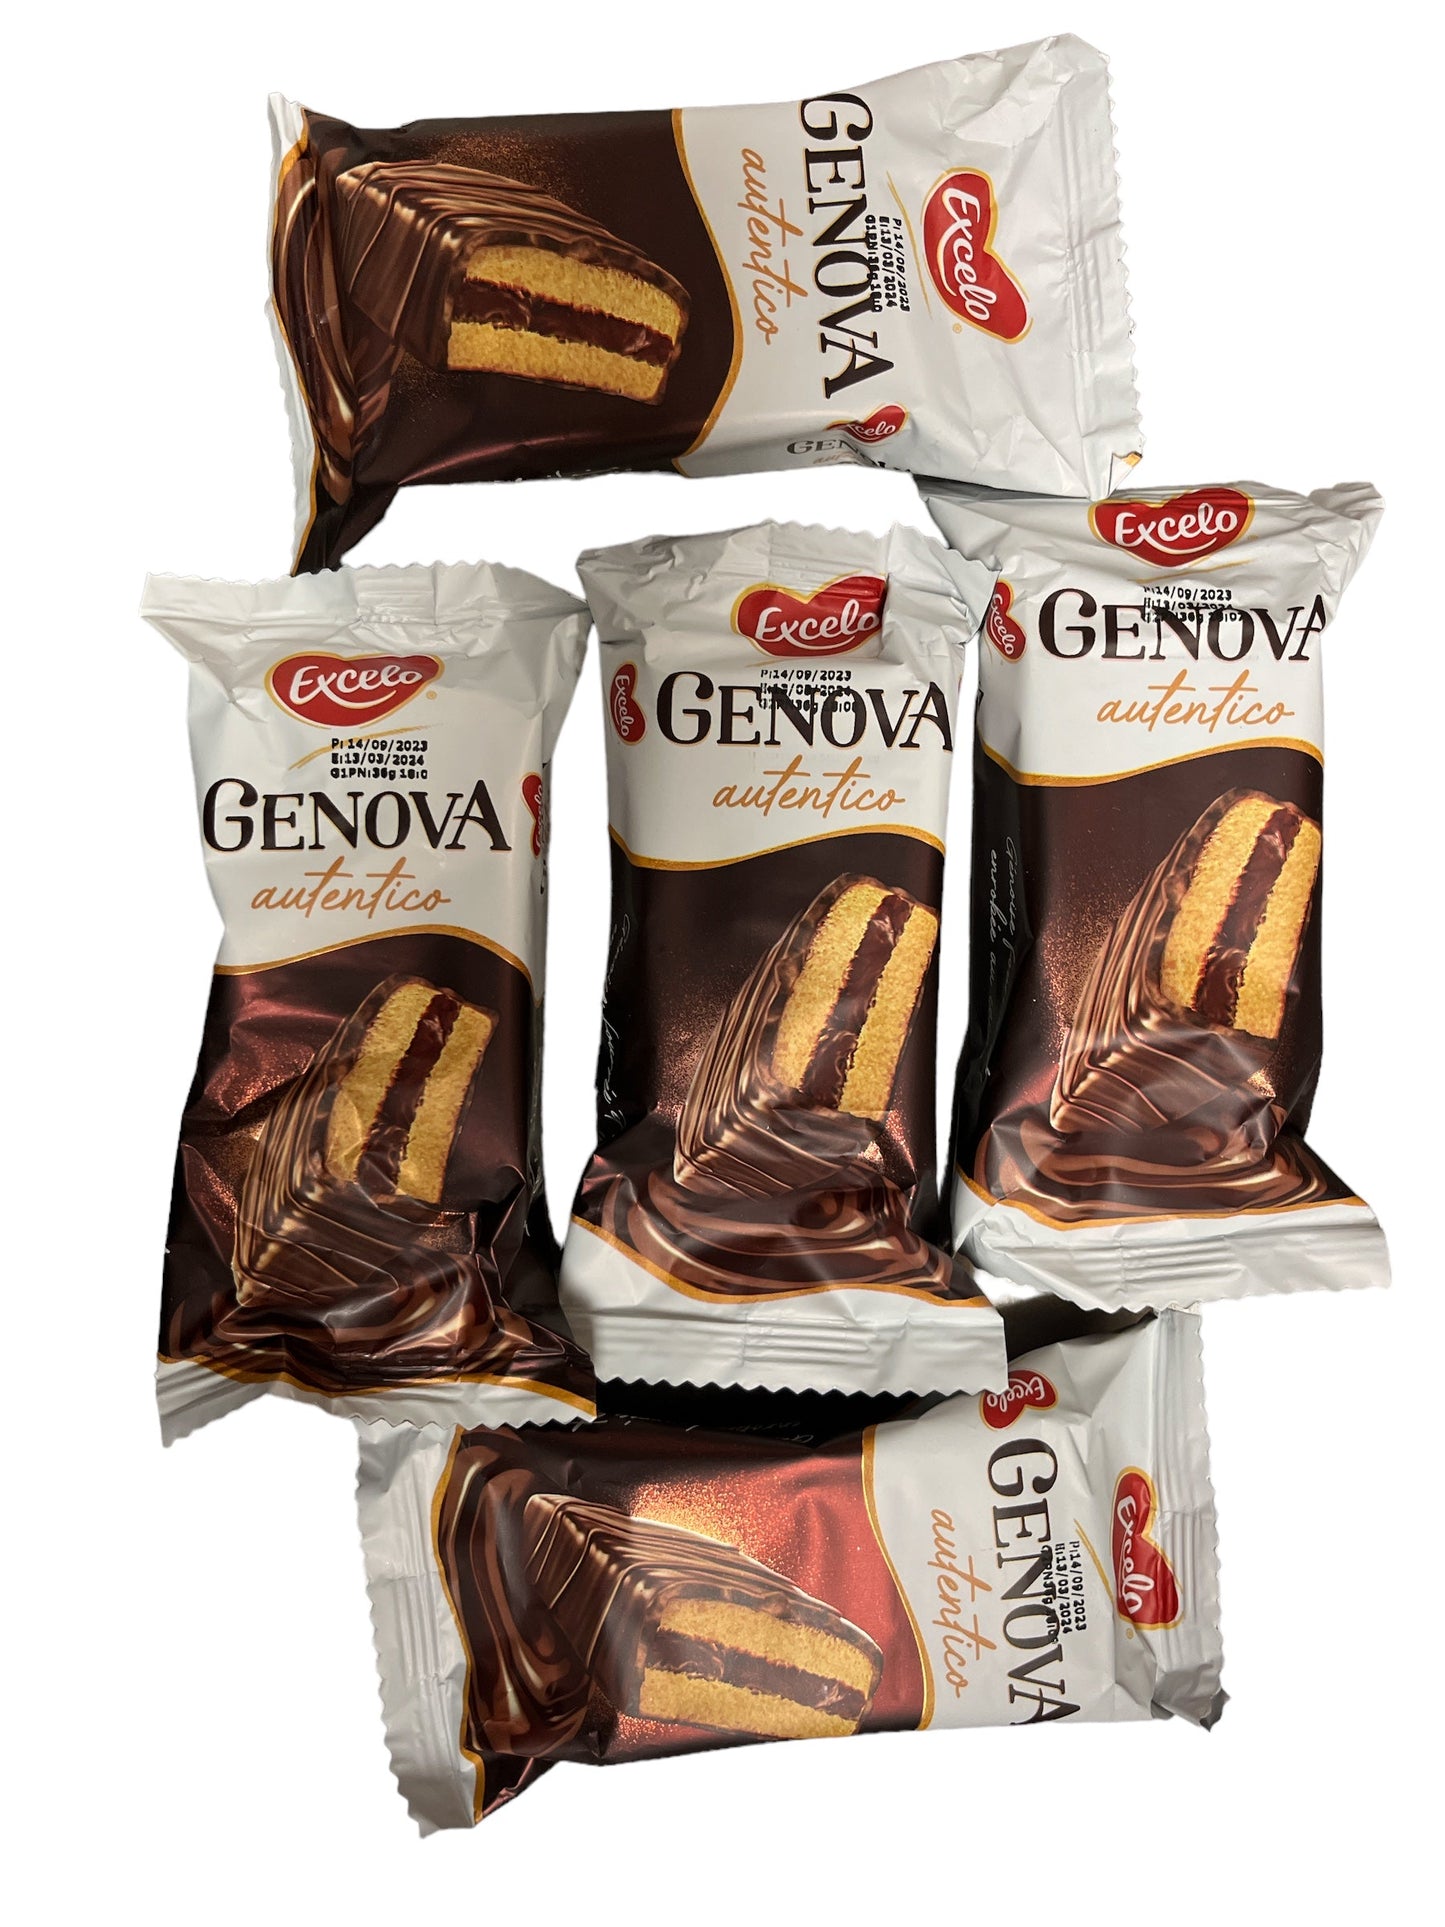 Excelo Genova Chocolate Cake 5x40g